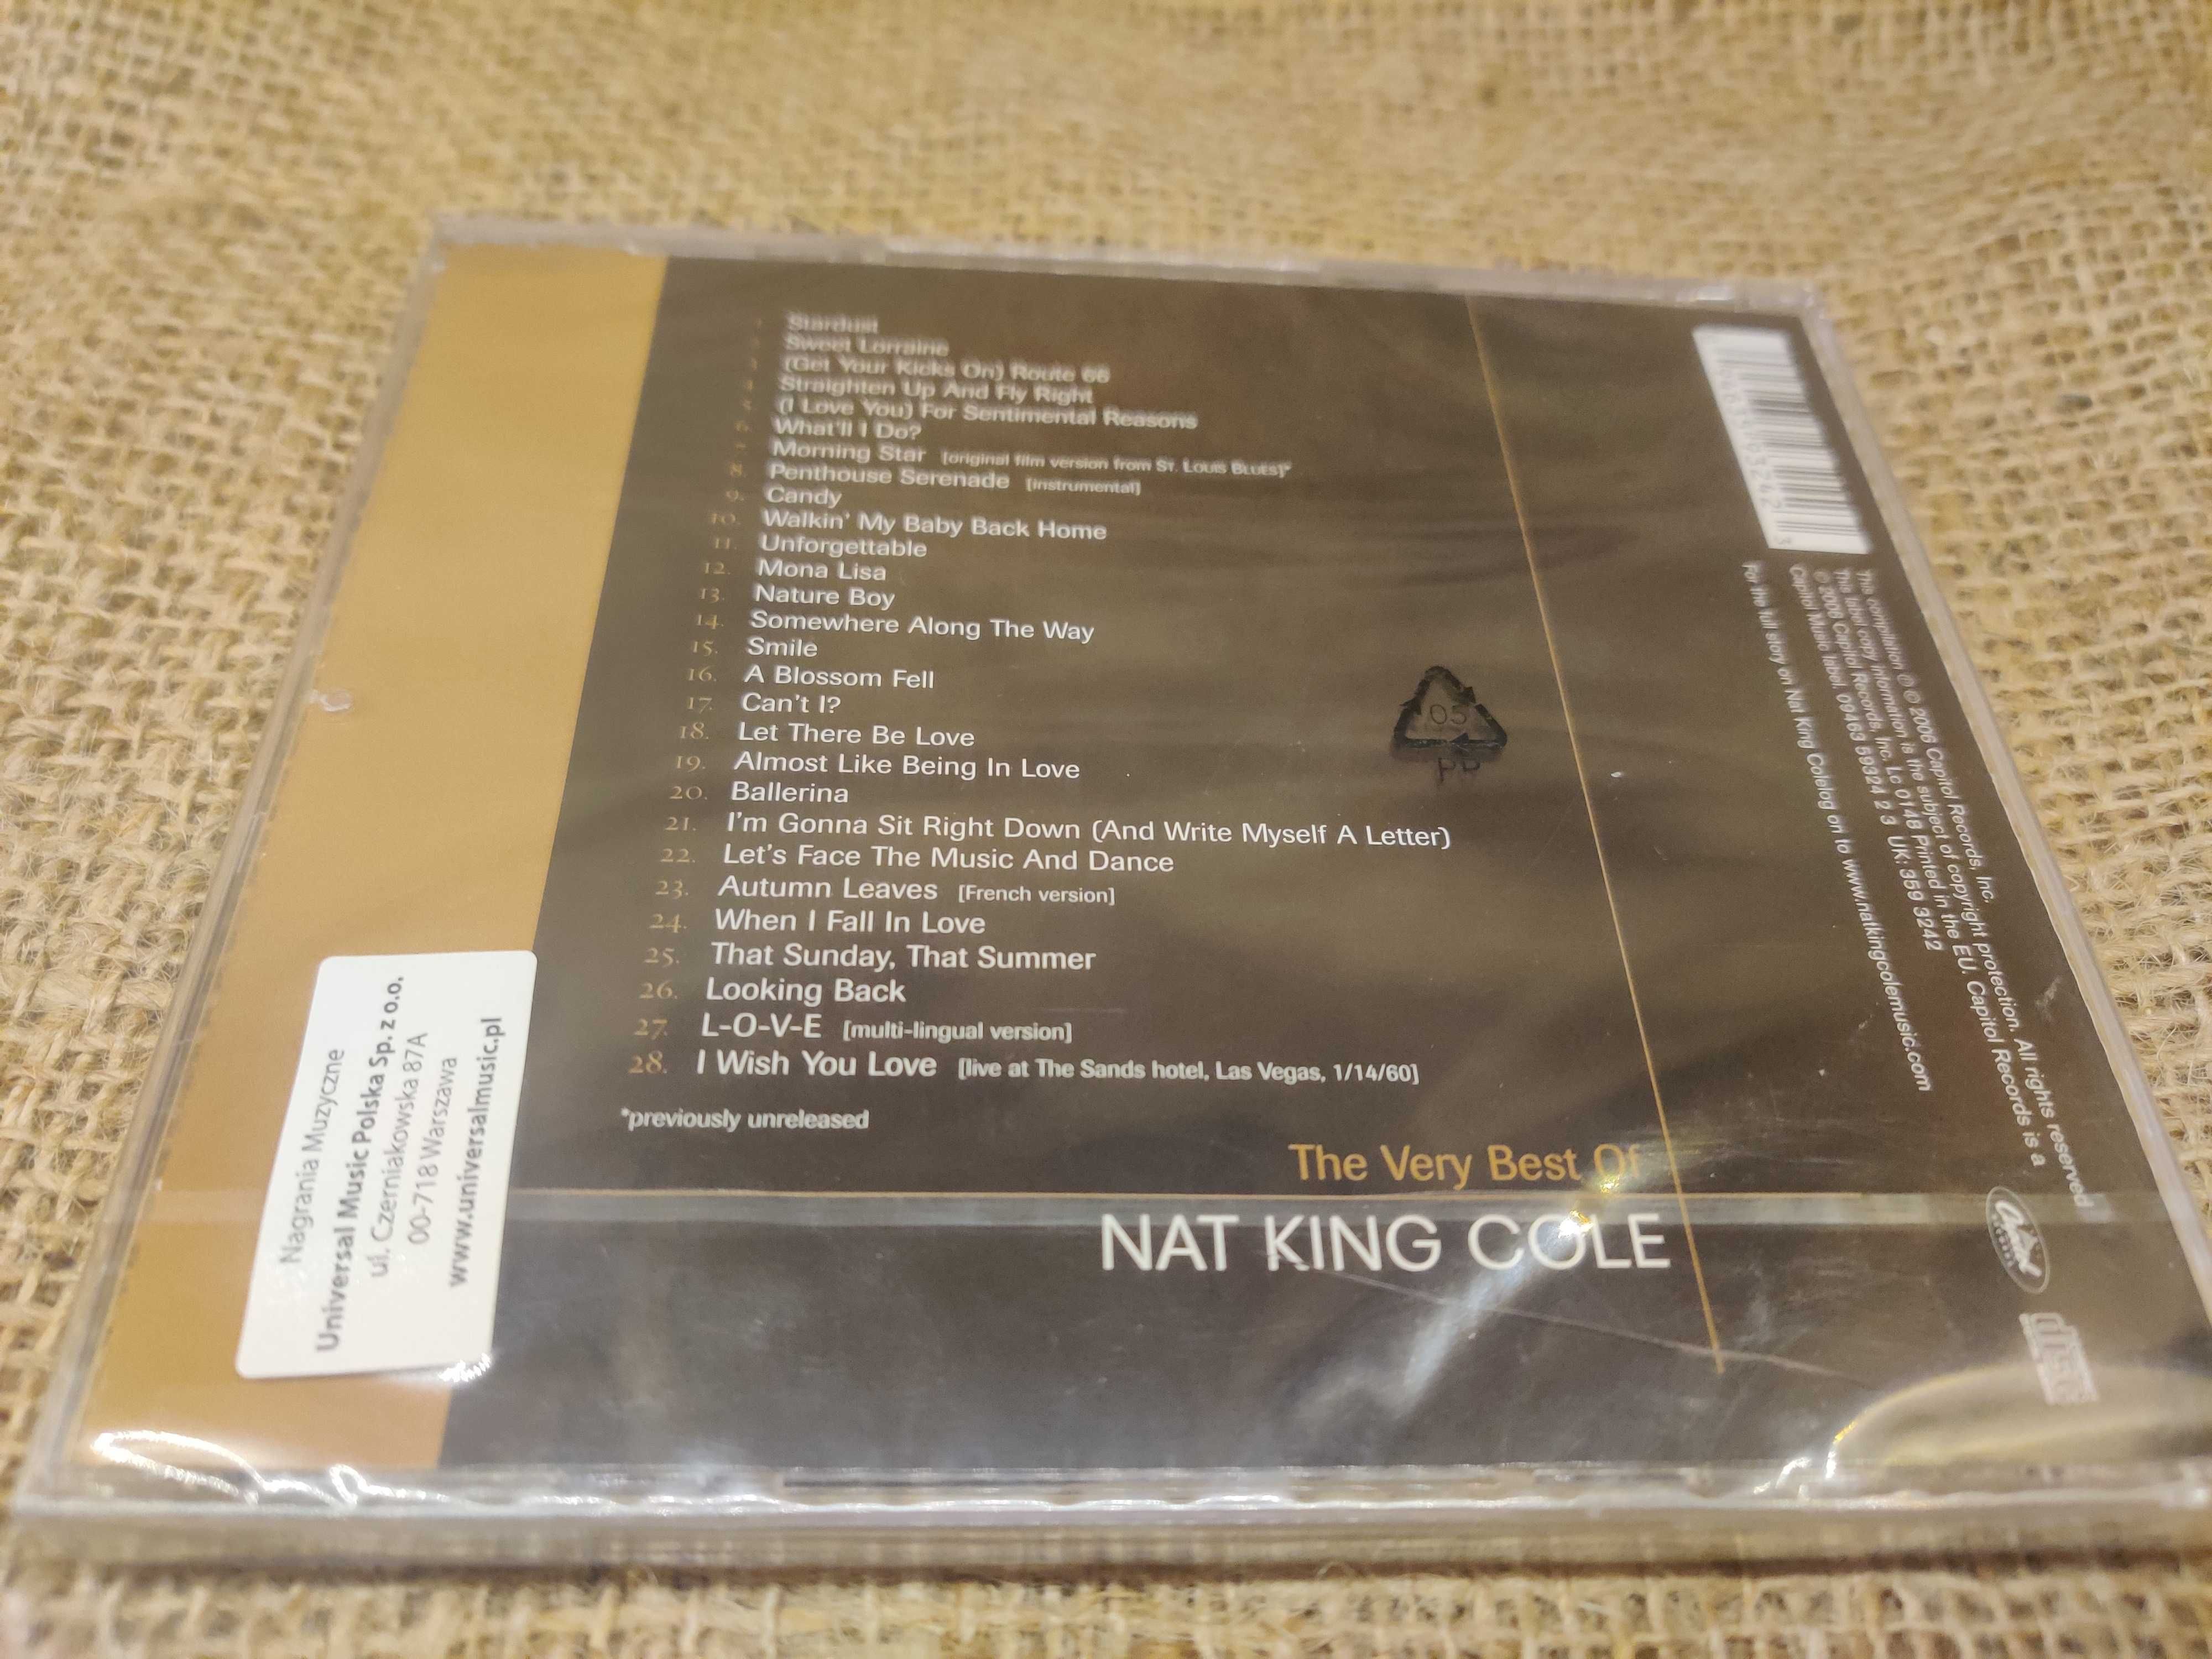 Nat King Cole - The Very Best Of Nat King Cole, nowa płyta CD